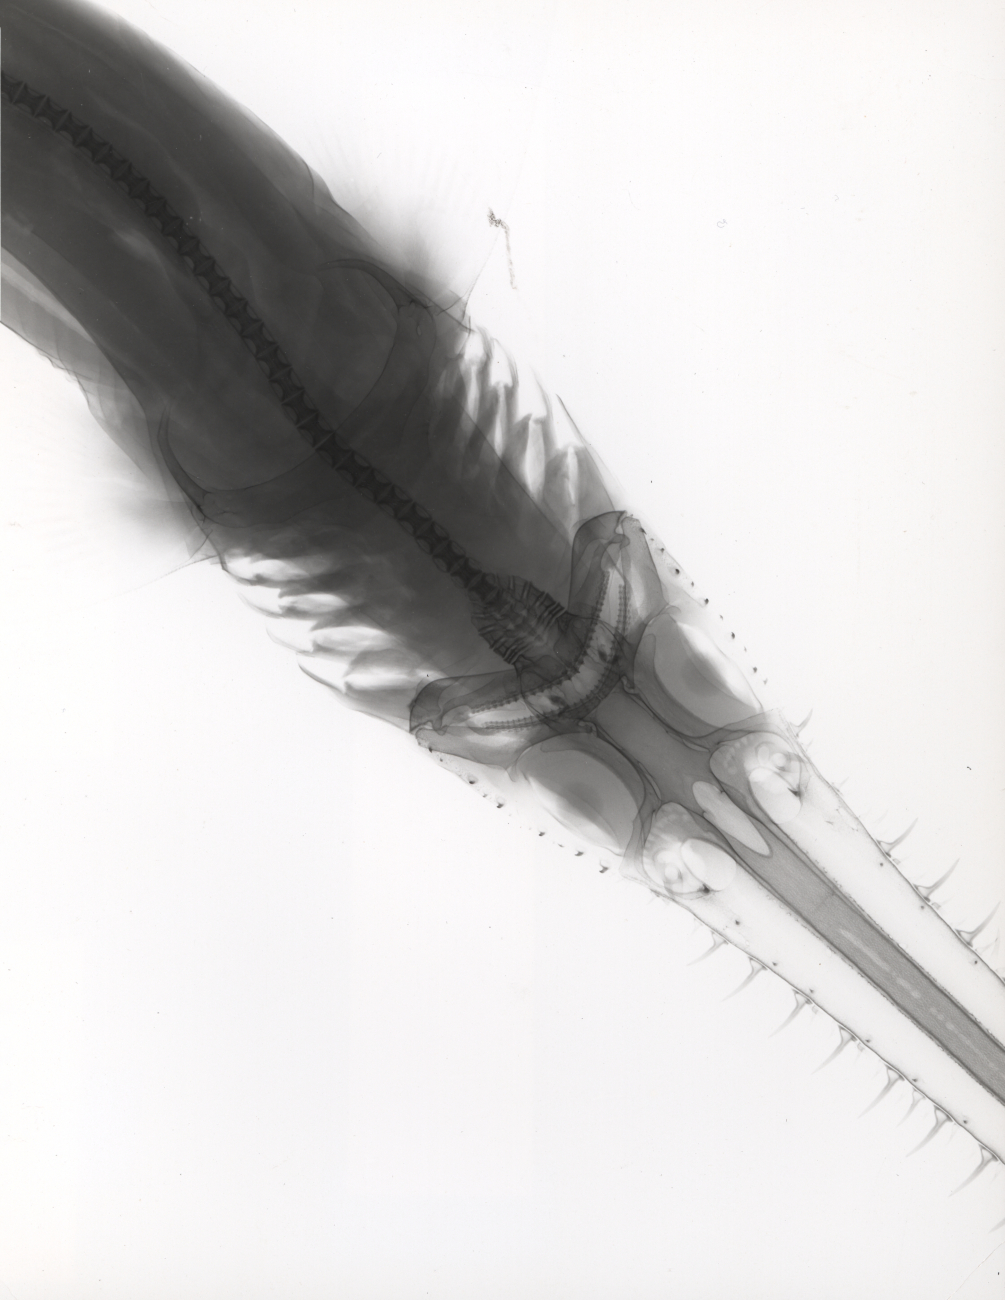 Positive of an X-ray of the head region of a sawshark (Pristiophorus sp